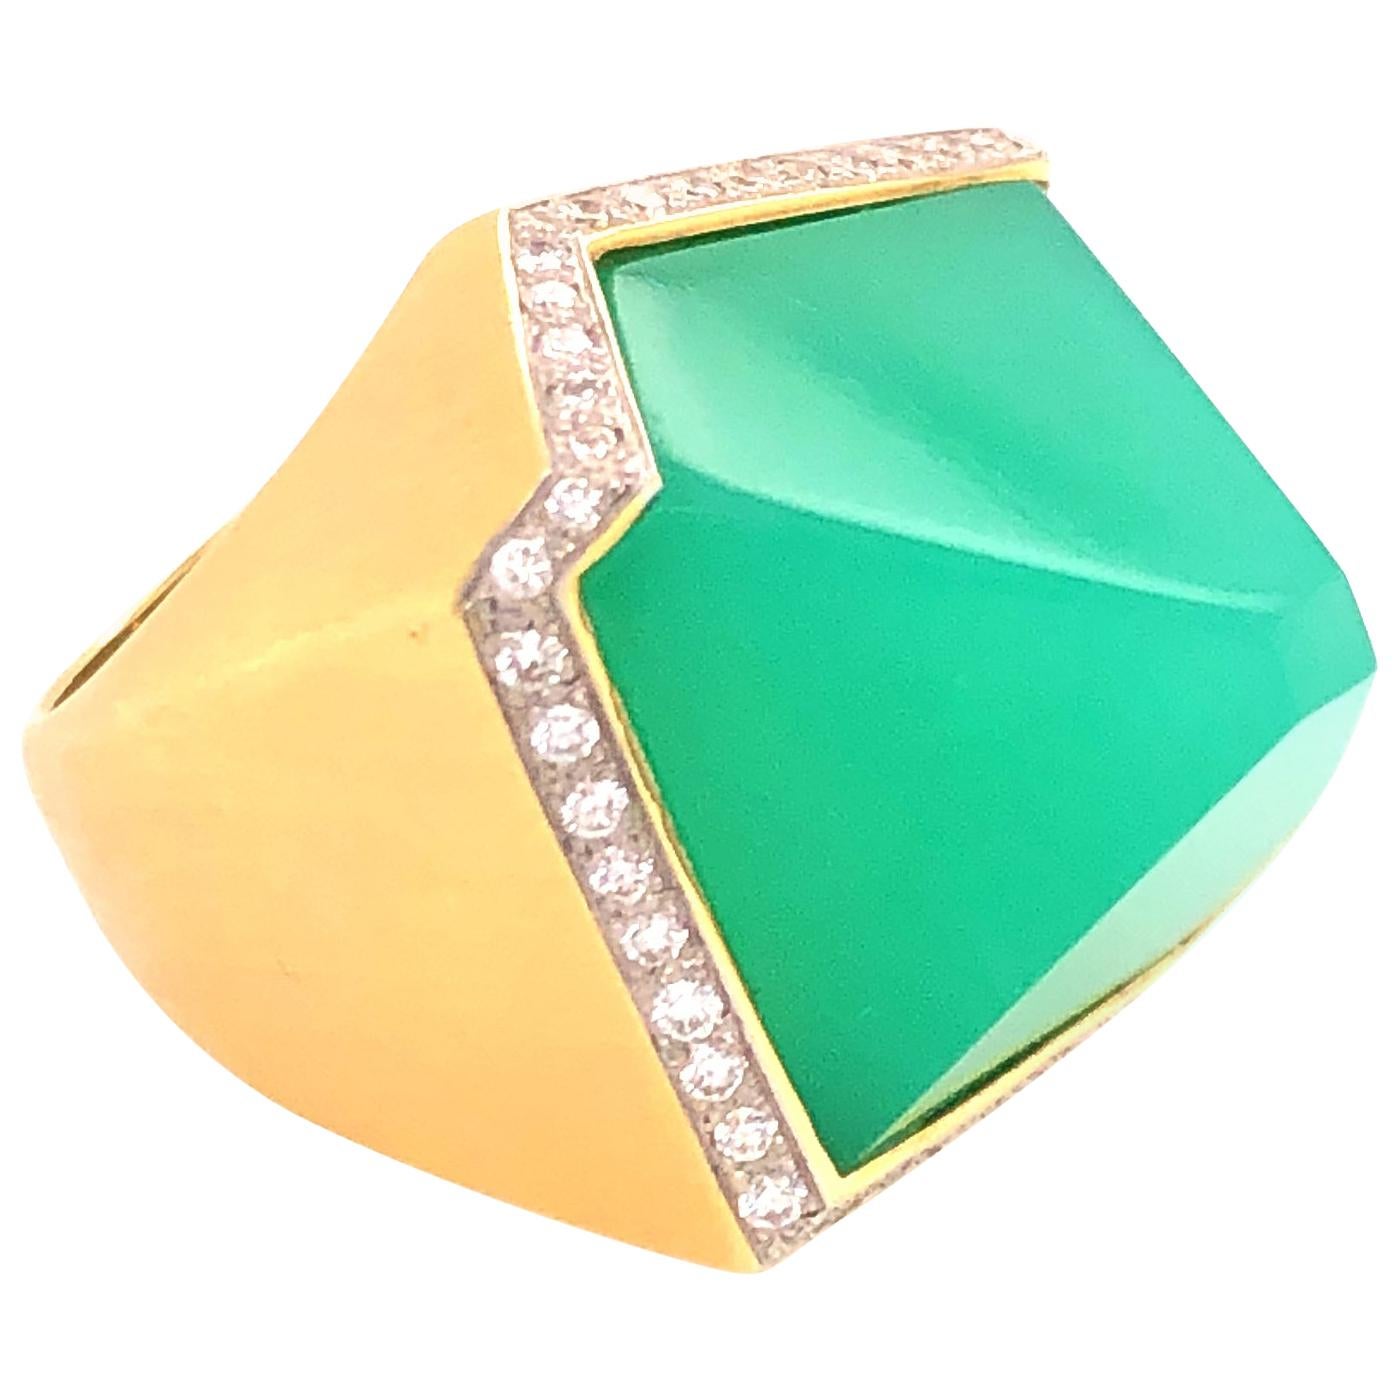 Valerie Naifeh 17.36 Carat Green Chrysoprase Diamond Ring